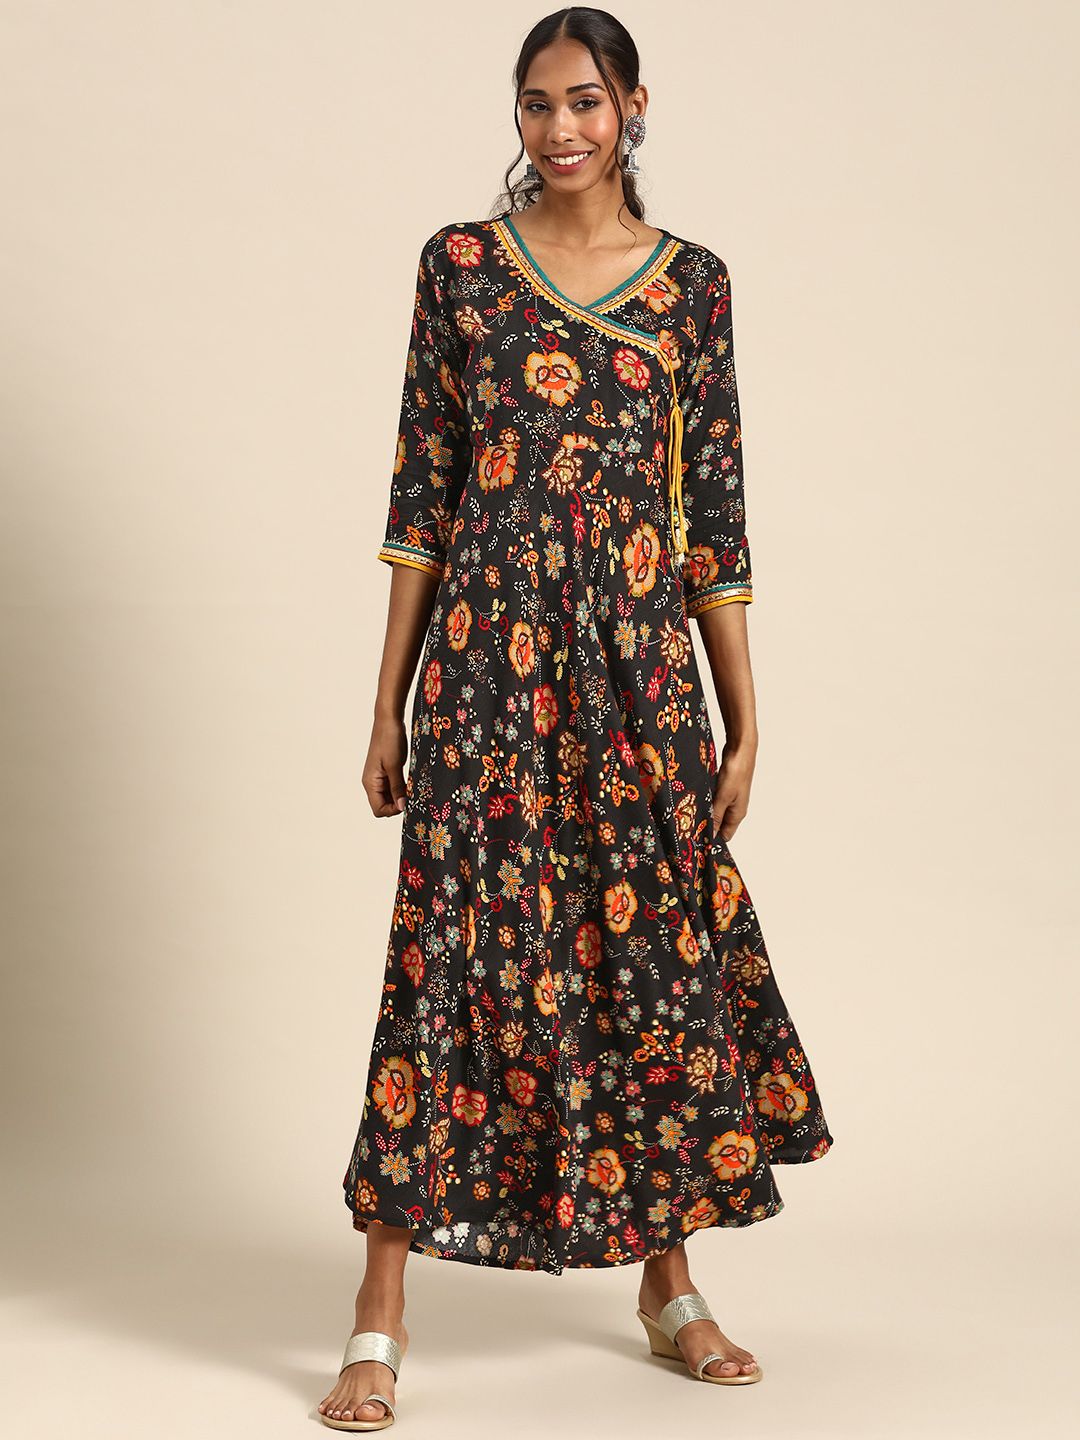 RANGMAYEE Black & Yellow Floral Liva Ethnic A-Line Maxi Dress Price in India